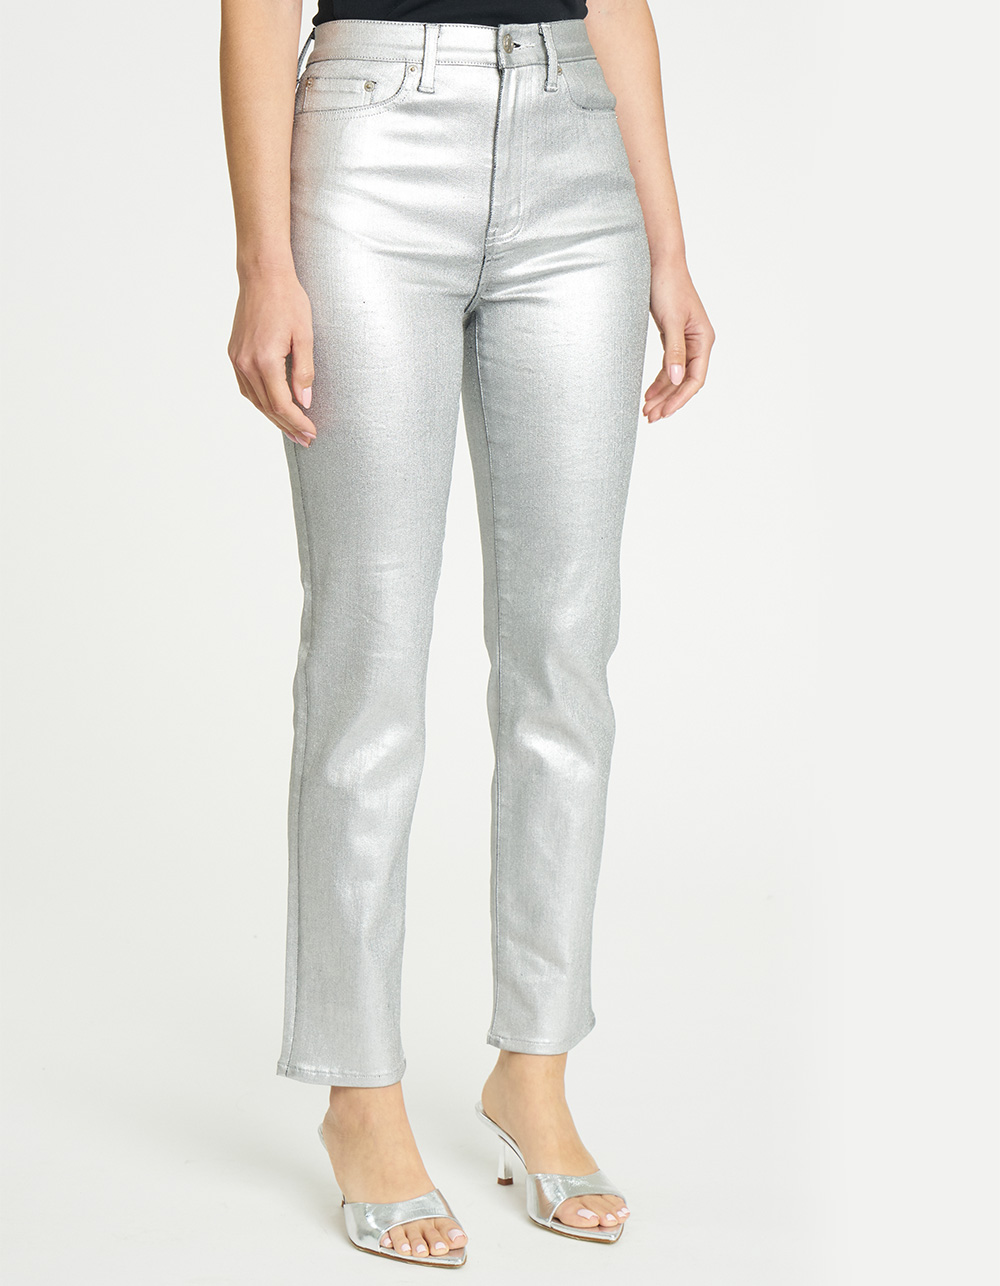 DAZE Smarty Pants Womens Coated Jeans - SILVER | Tillys